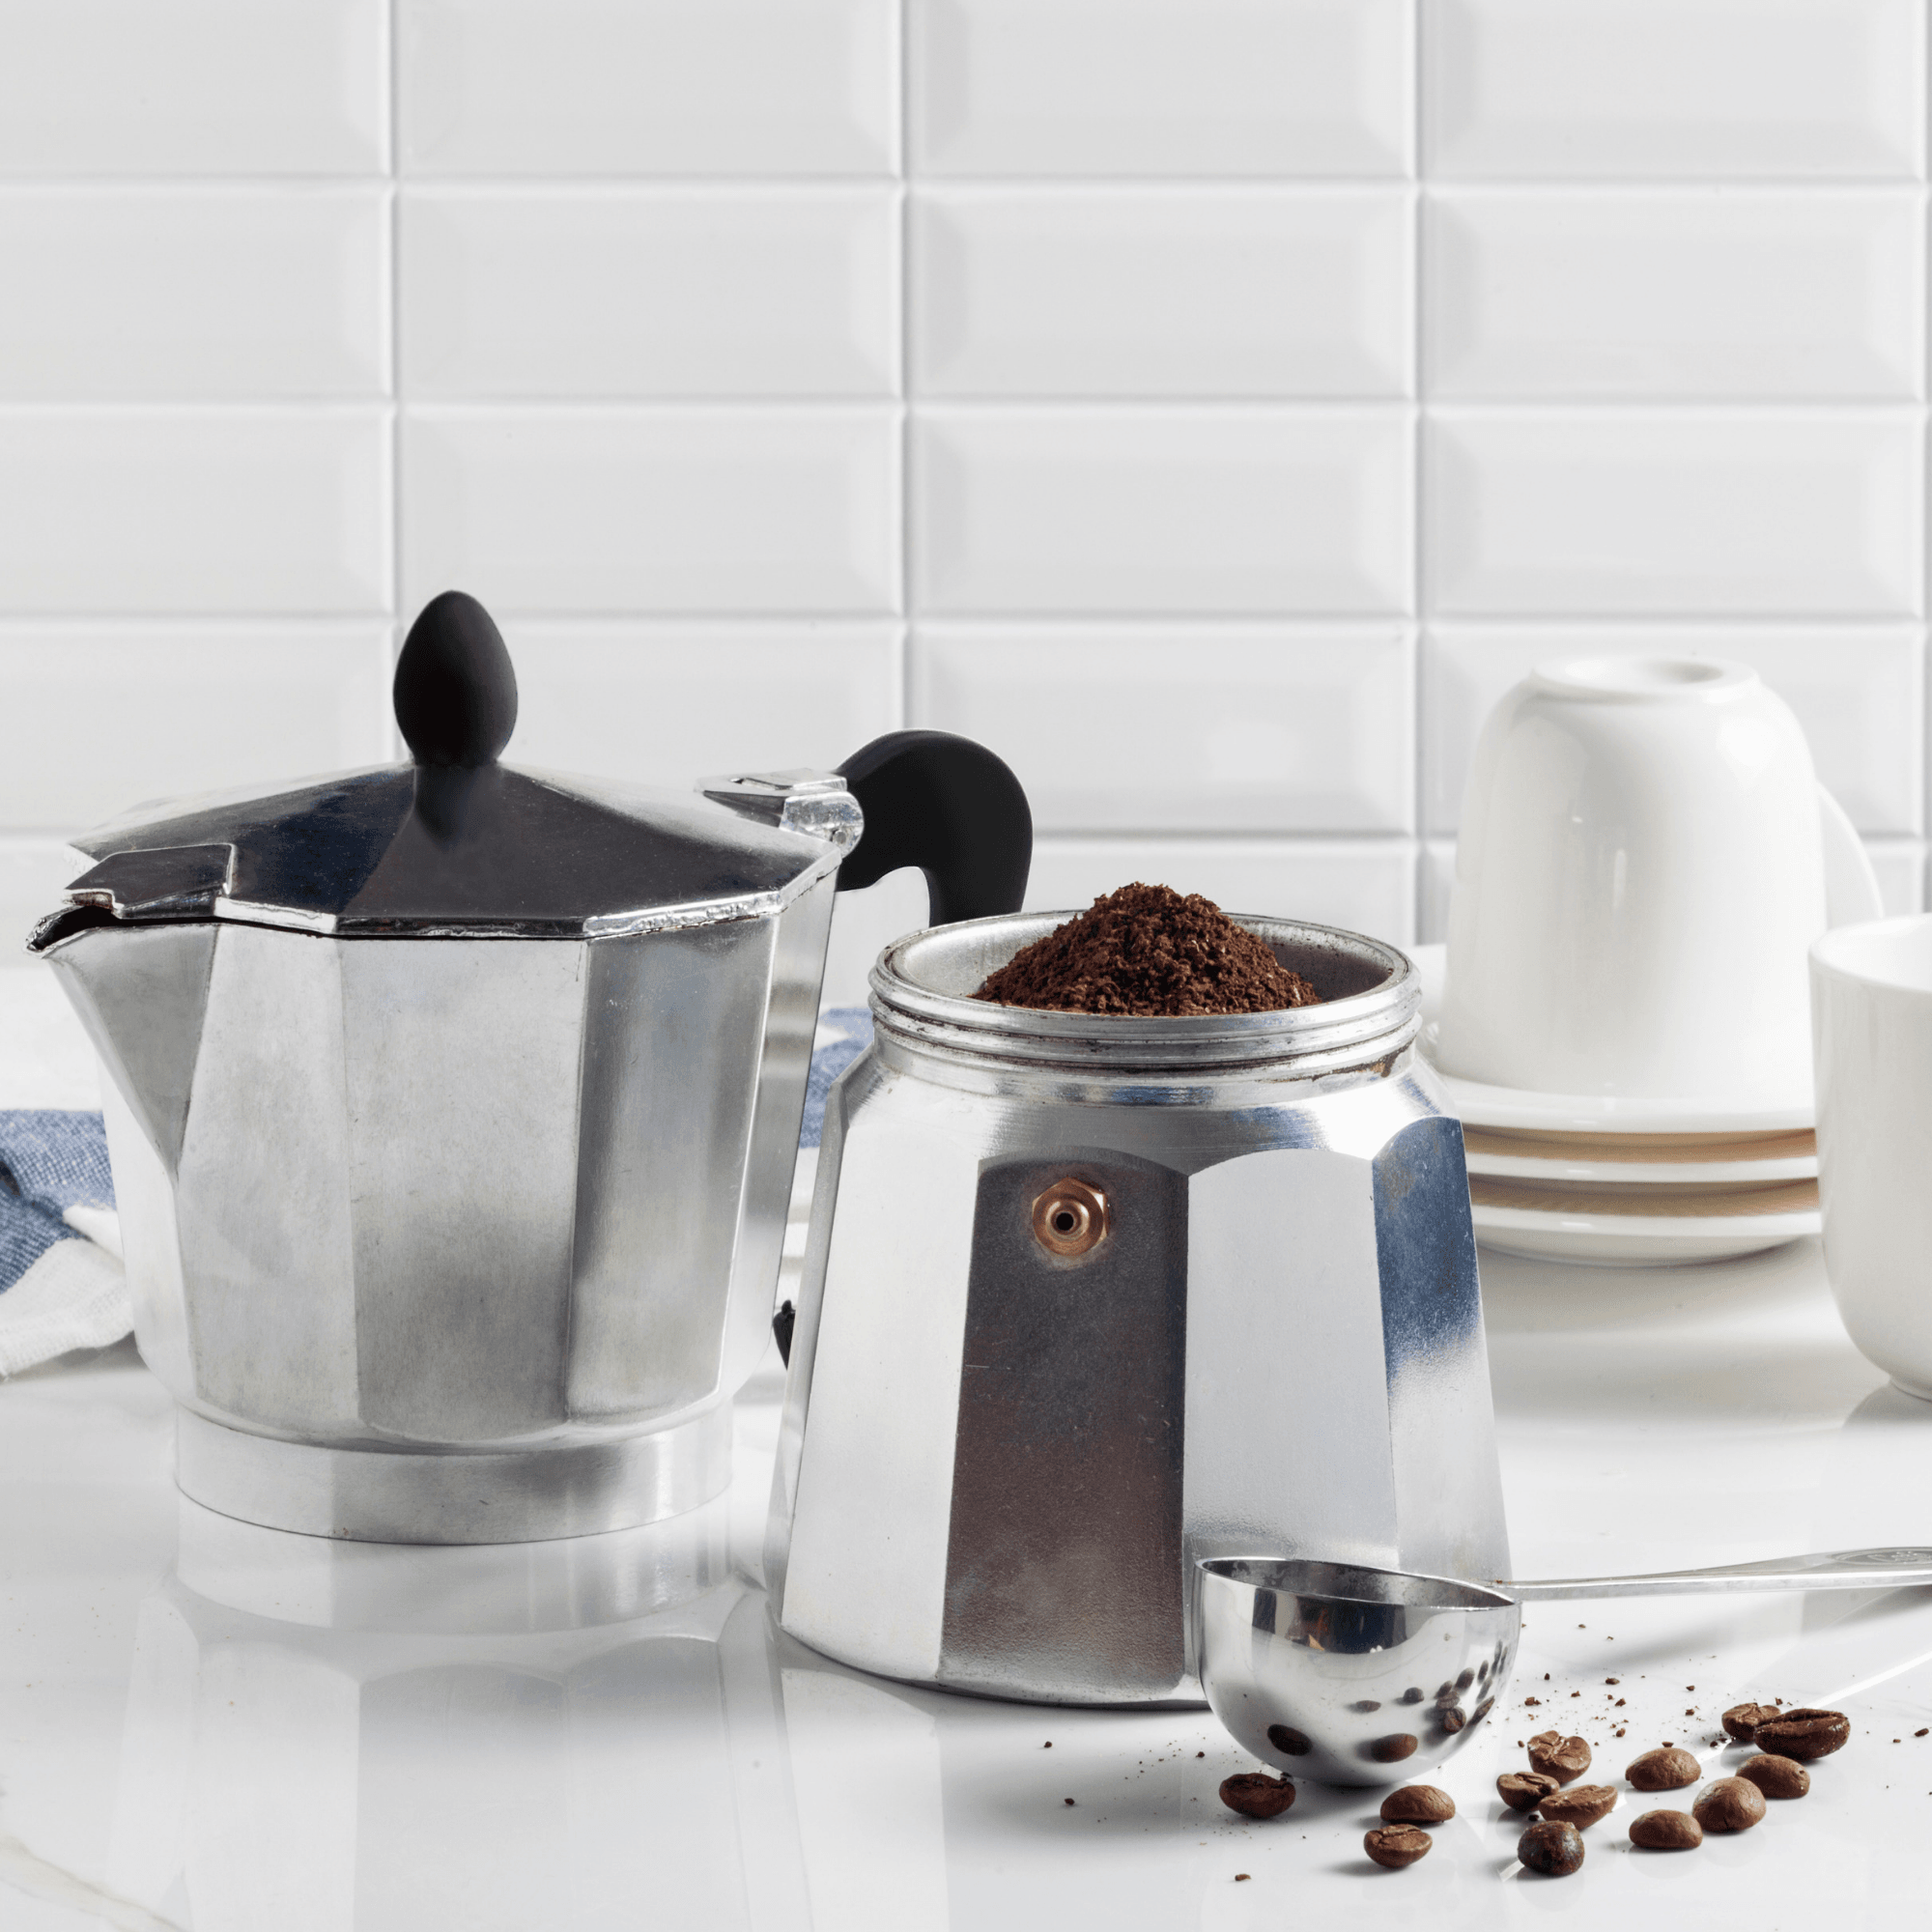  Coffee Pot, Stainless Steel Moka Pot Italian Coffee